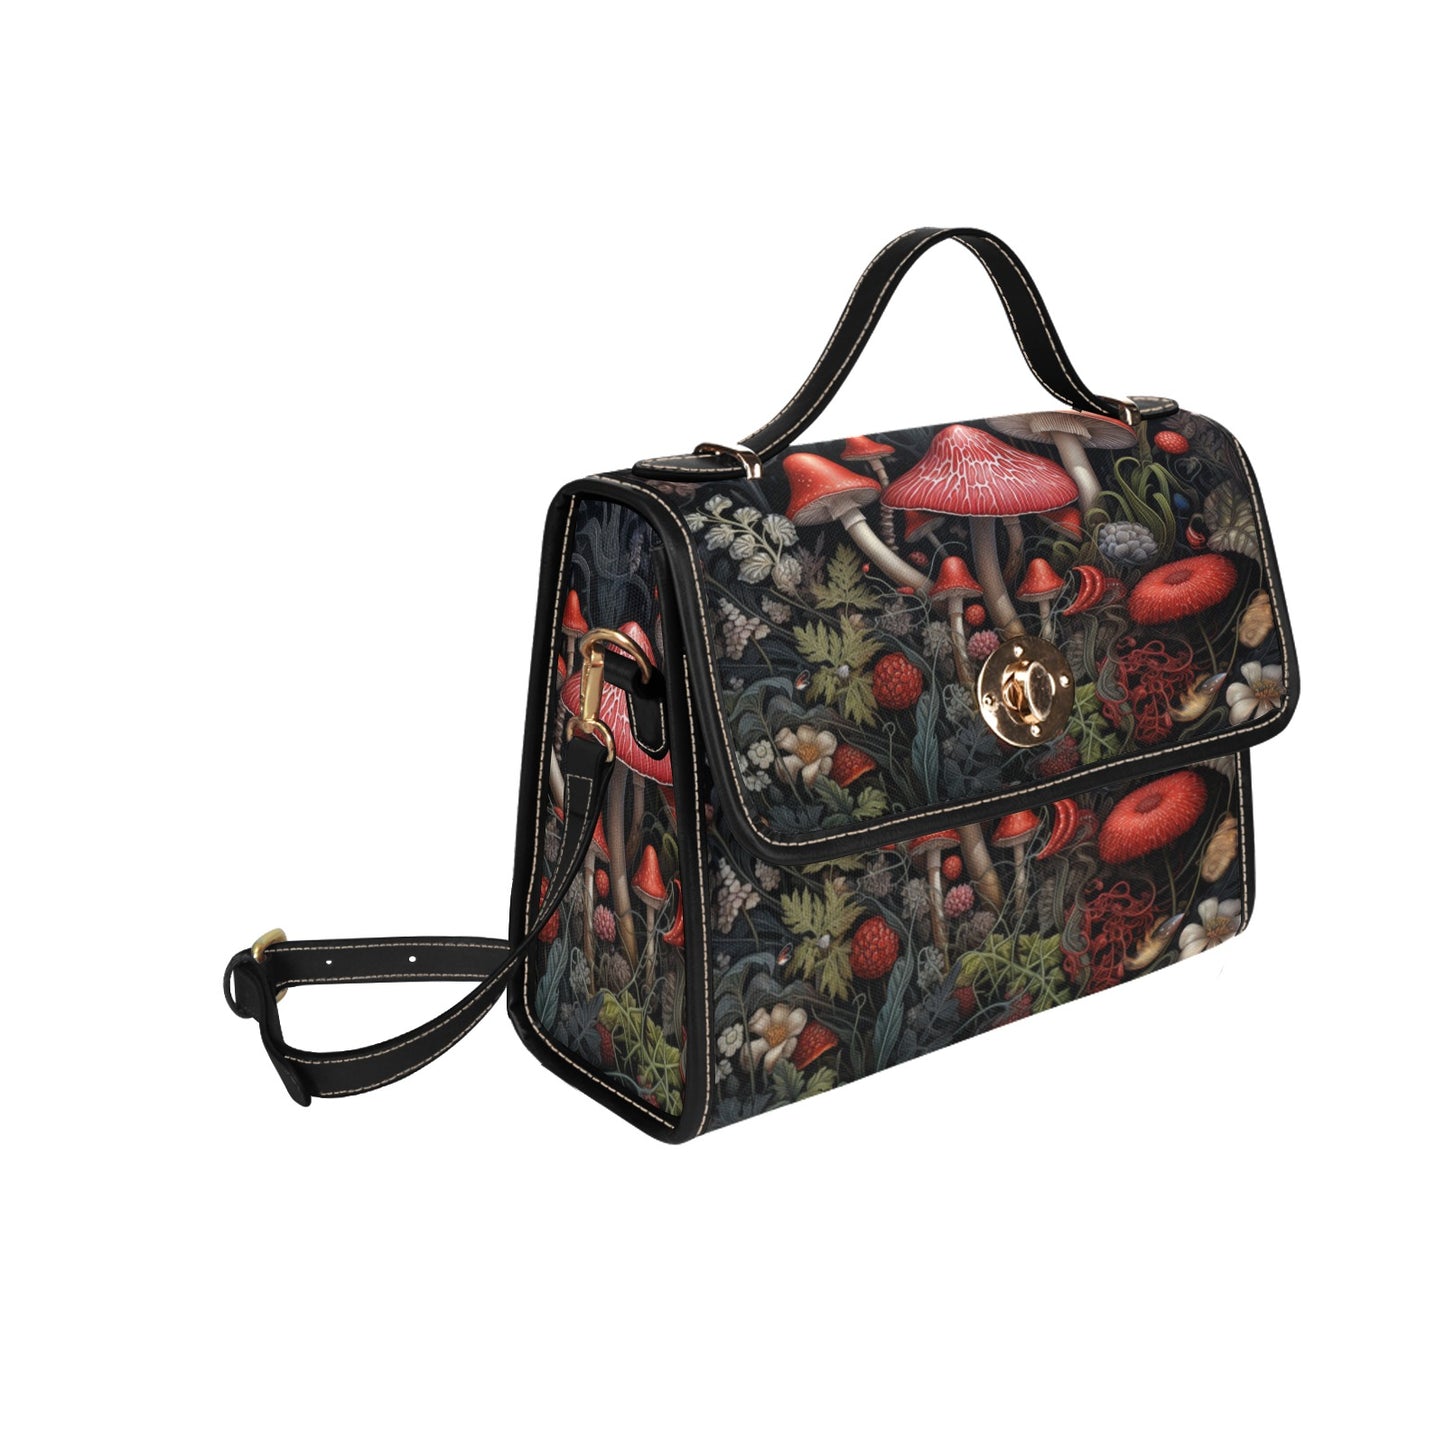 Red Mushroom Canvas Satchel bag, Wildflowers Forest Vintage Cottagecore Waterproof Cute Women Crossbody Purse Vegan Leather Strap Handbag Starcove Fashion